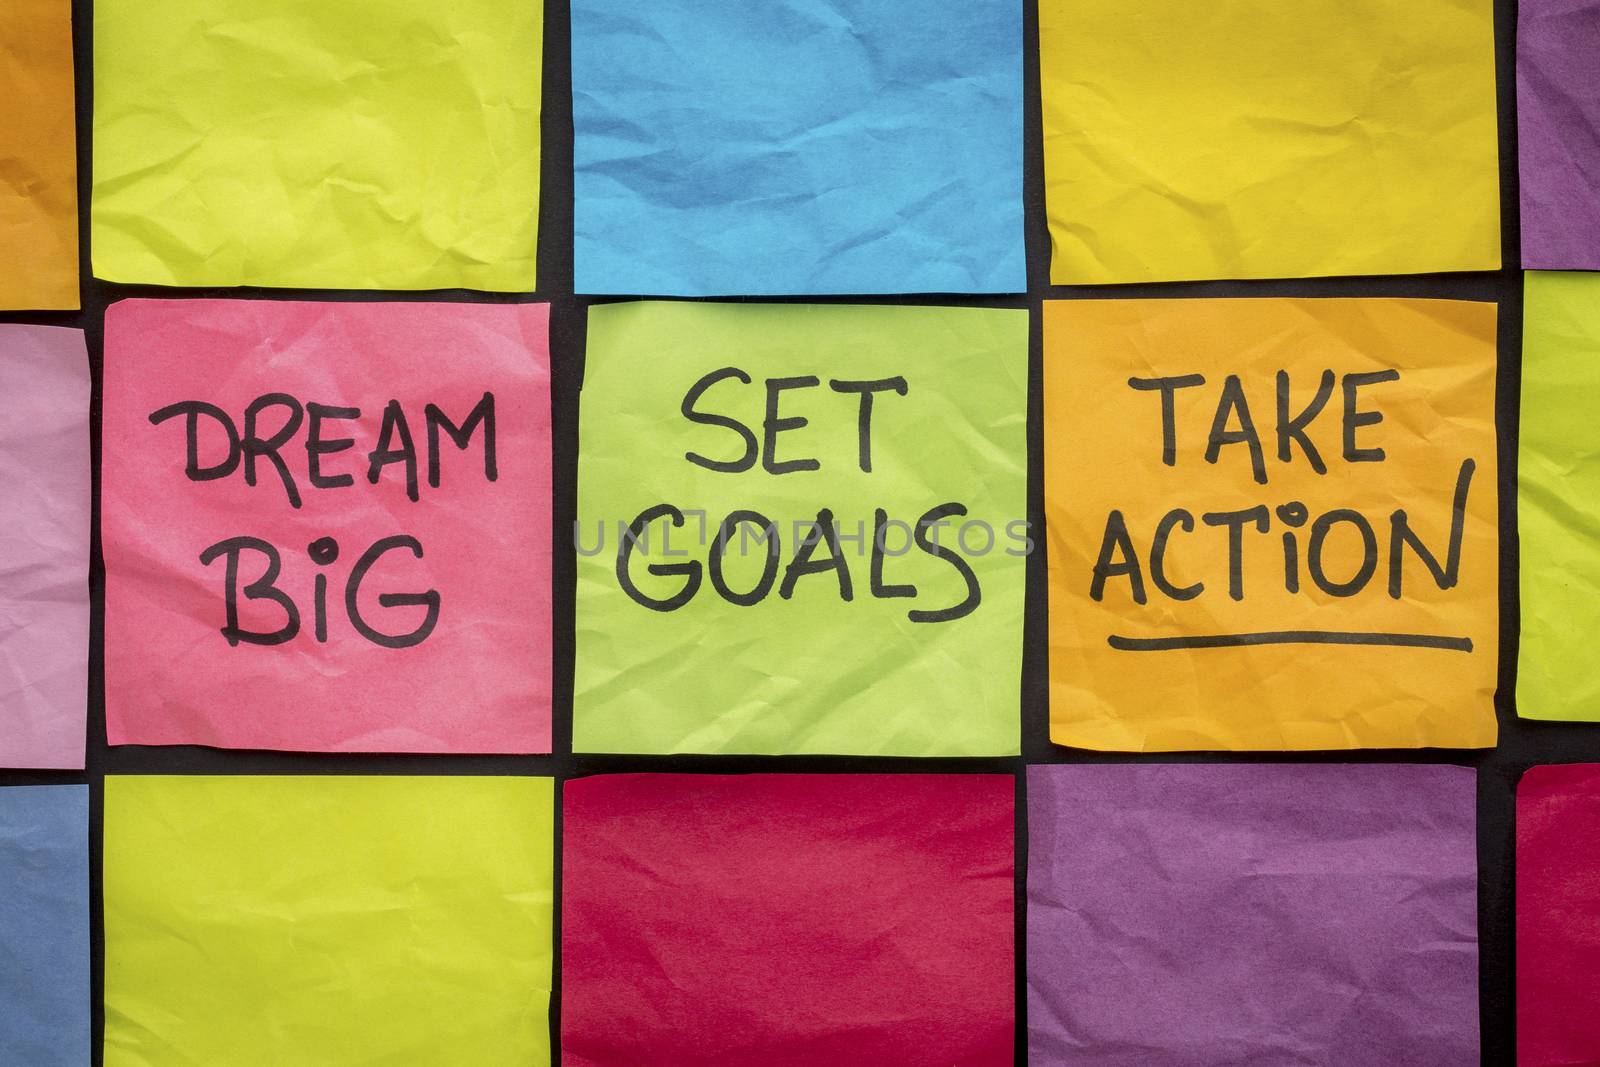 dream big, set goals, take action - motivational advice or reminder on colorful sticky notes